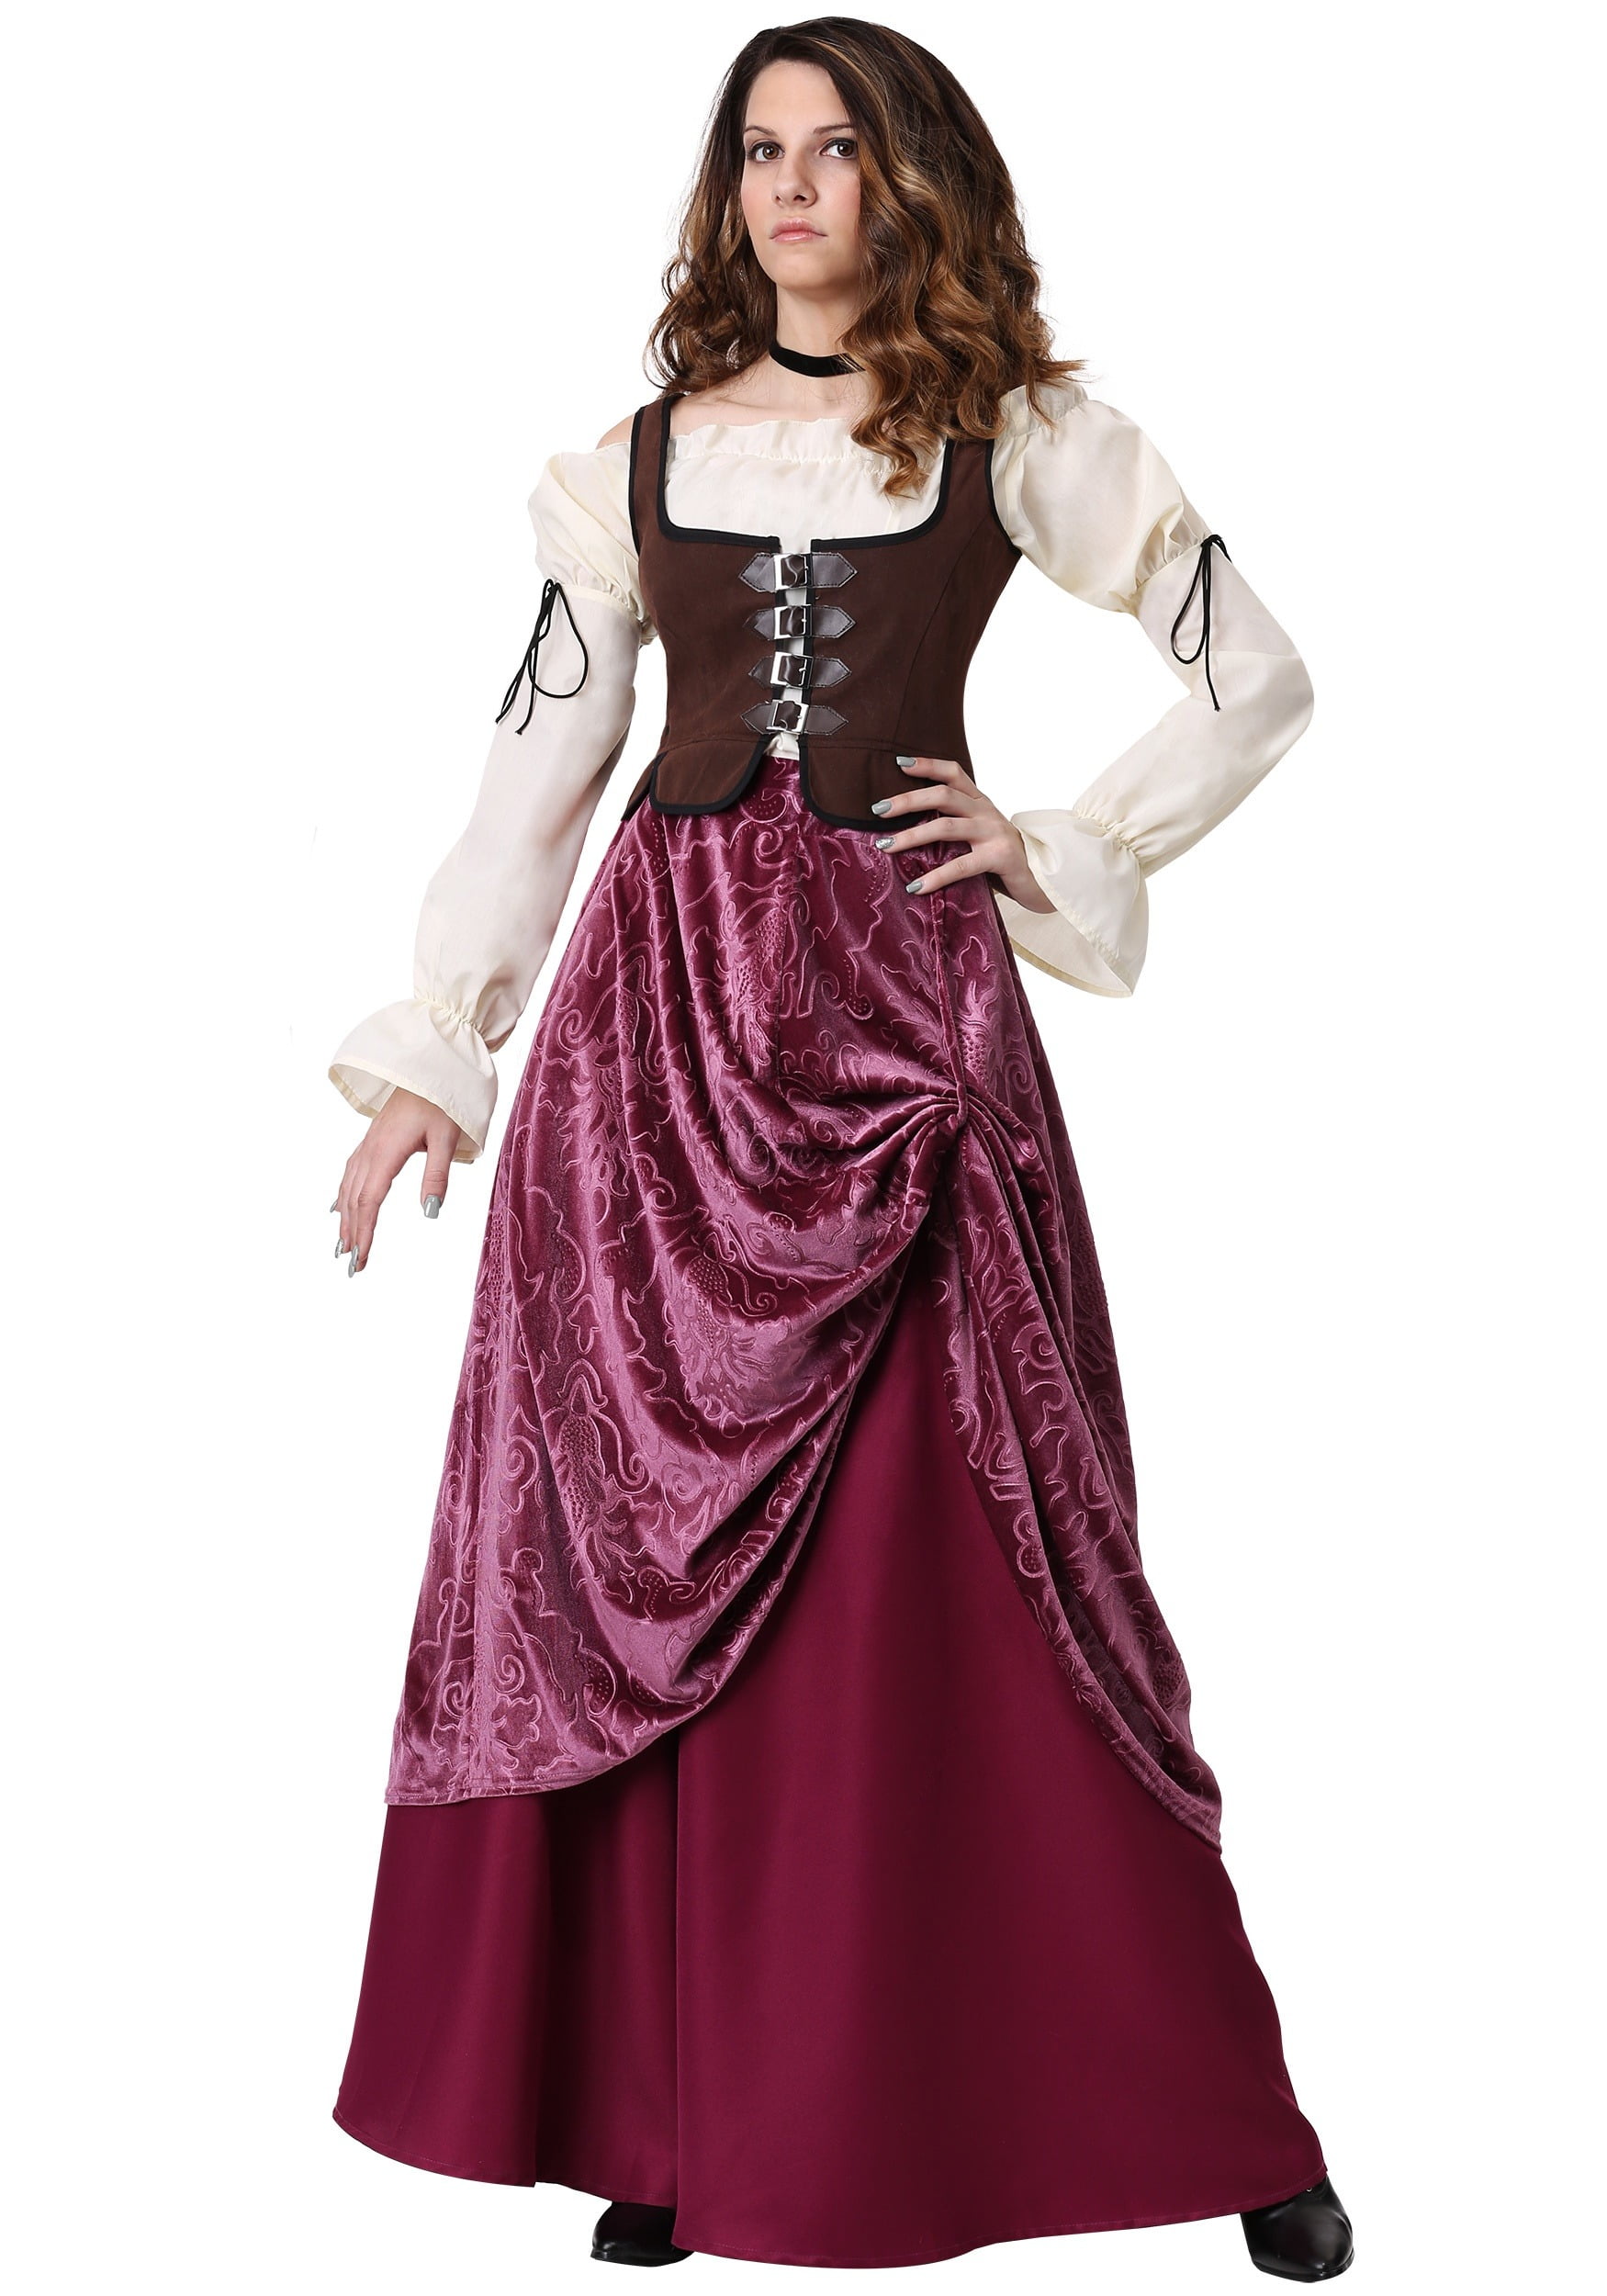 Tavern Wench  Medieval Maiden Victorian Tudor Ladies Fancy Dress Costume S-XL 